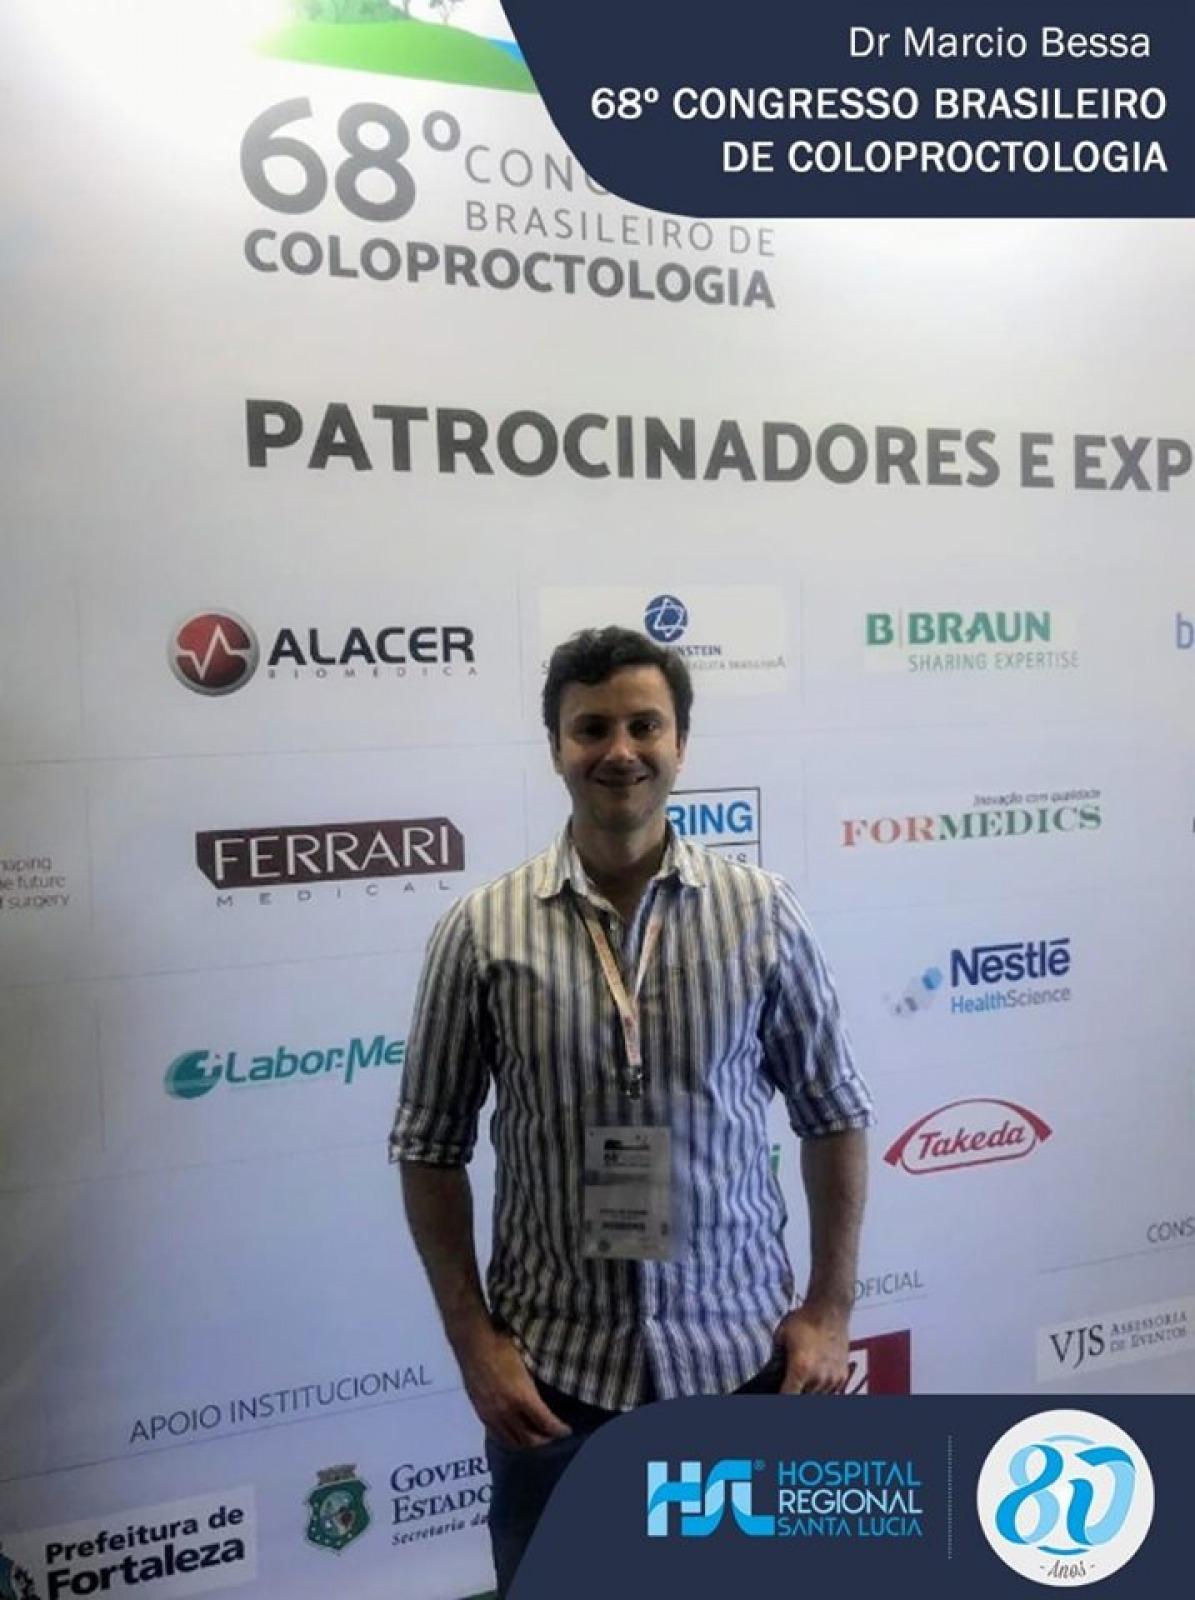 68º Congresso Brasileiro de Coloproctologia